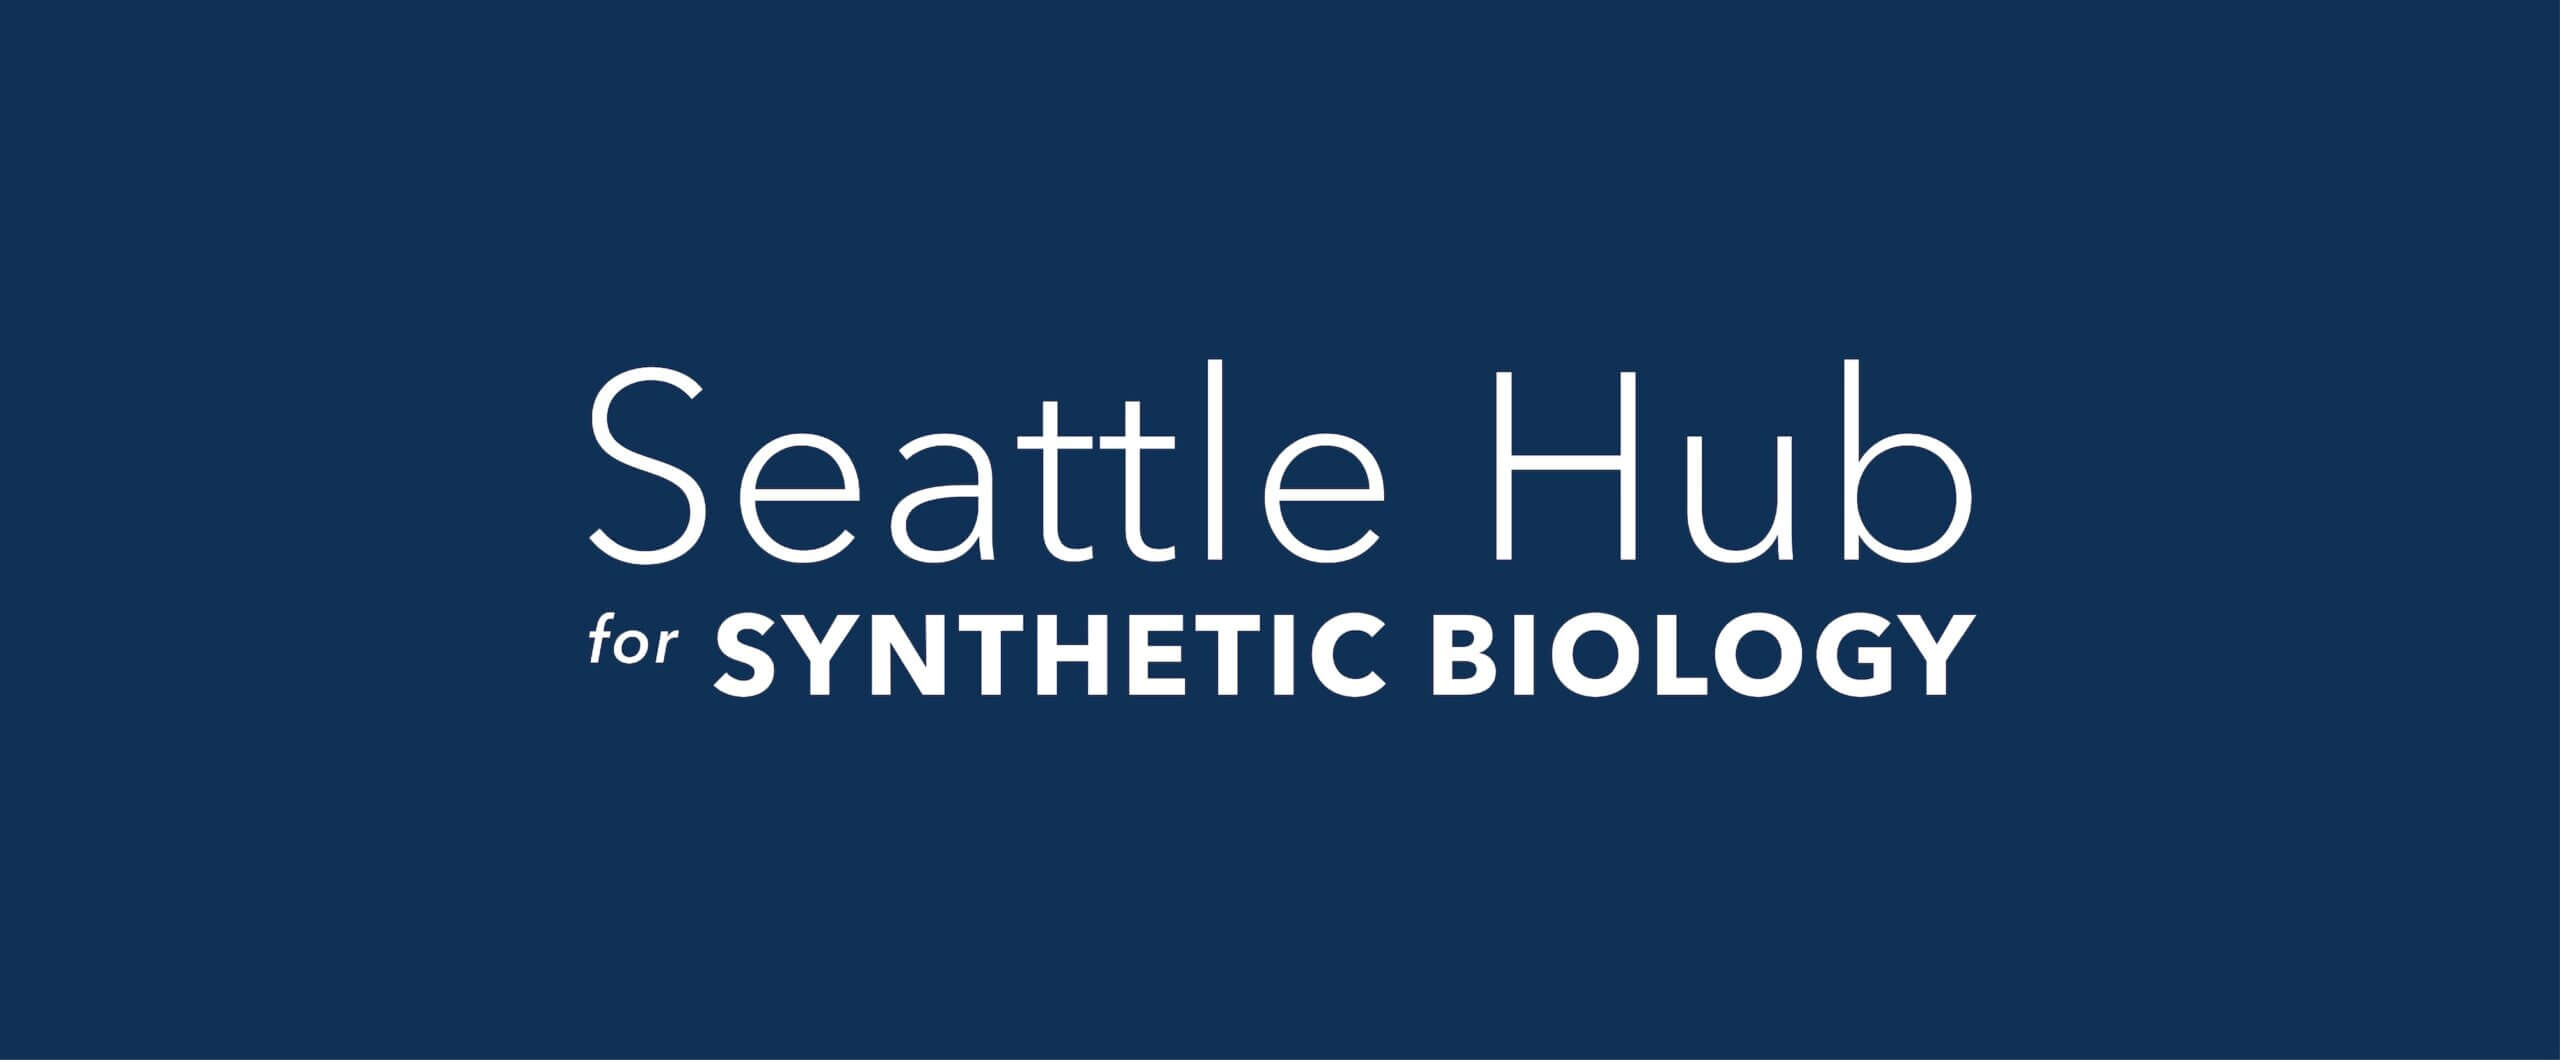 Seattle Hub for Synthetic Biology wordmark